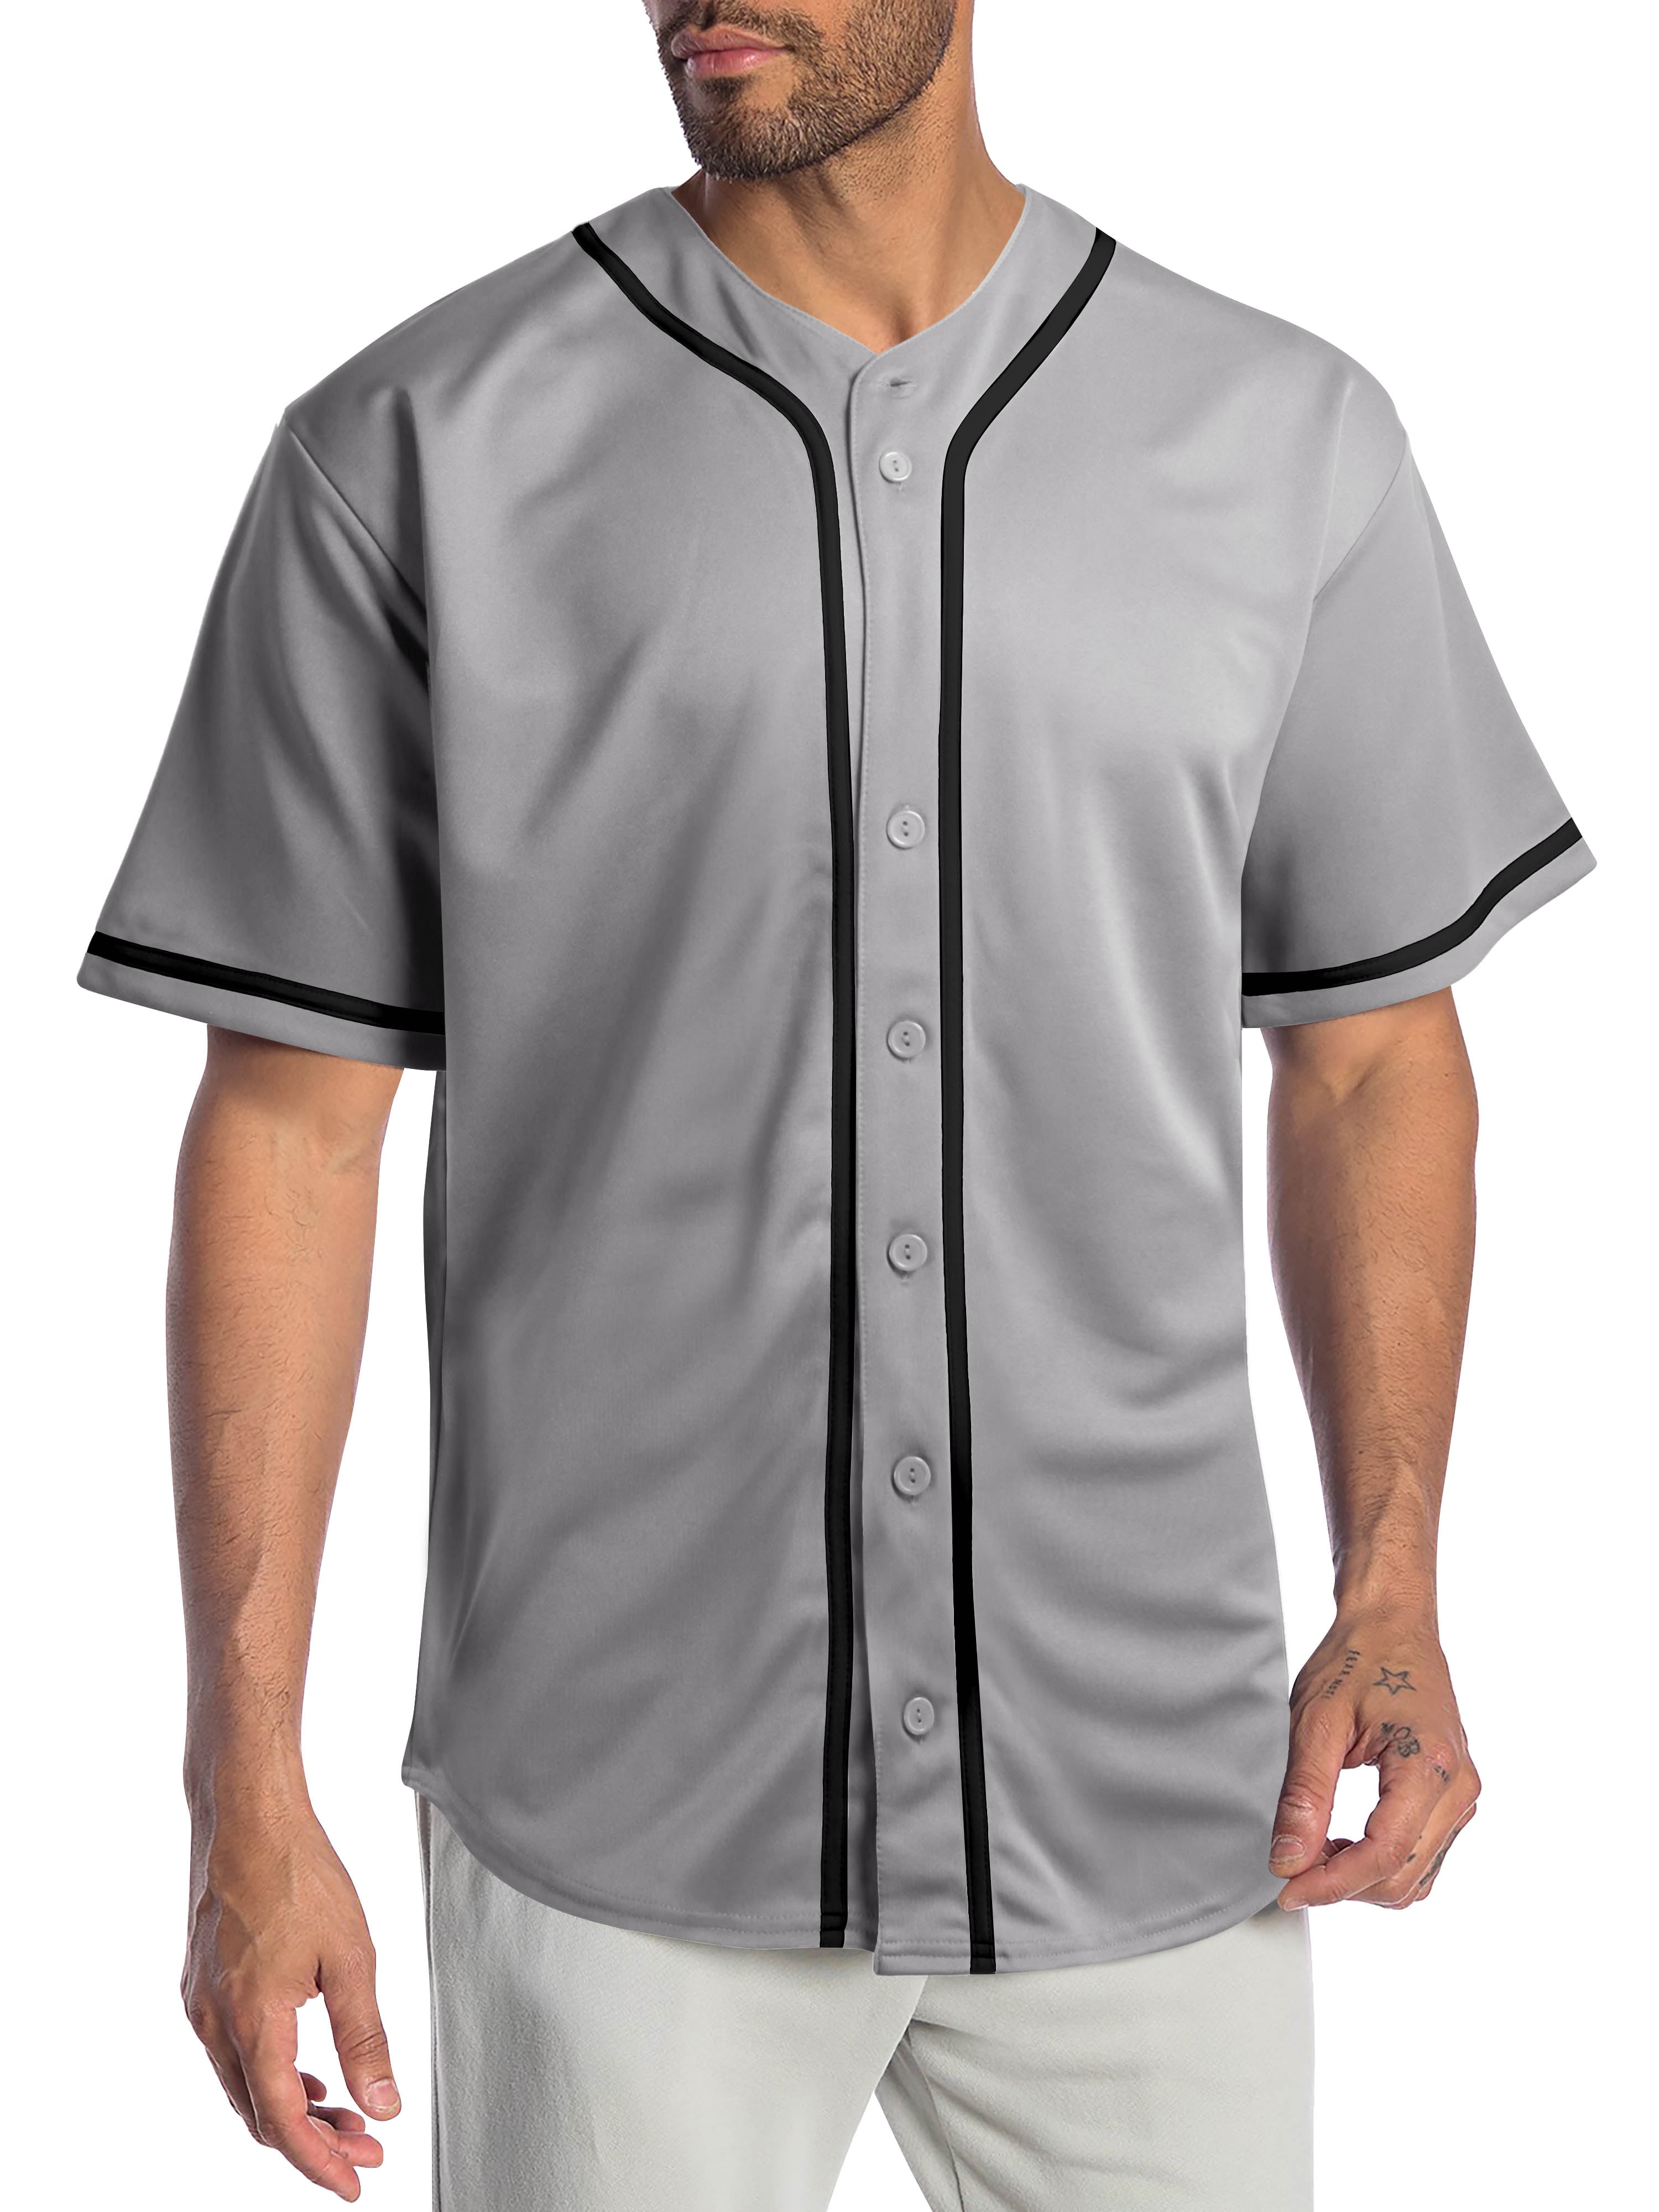 Baseball Jersey T-Shirts Plain Button Down Sports Tee